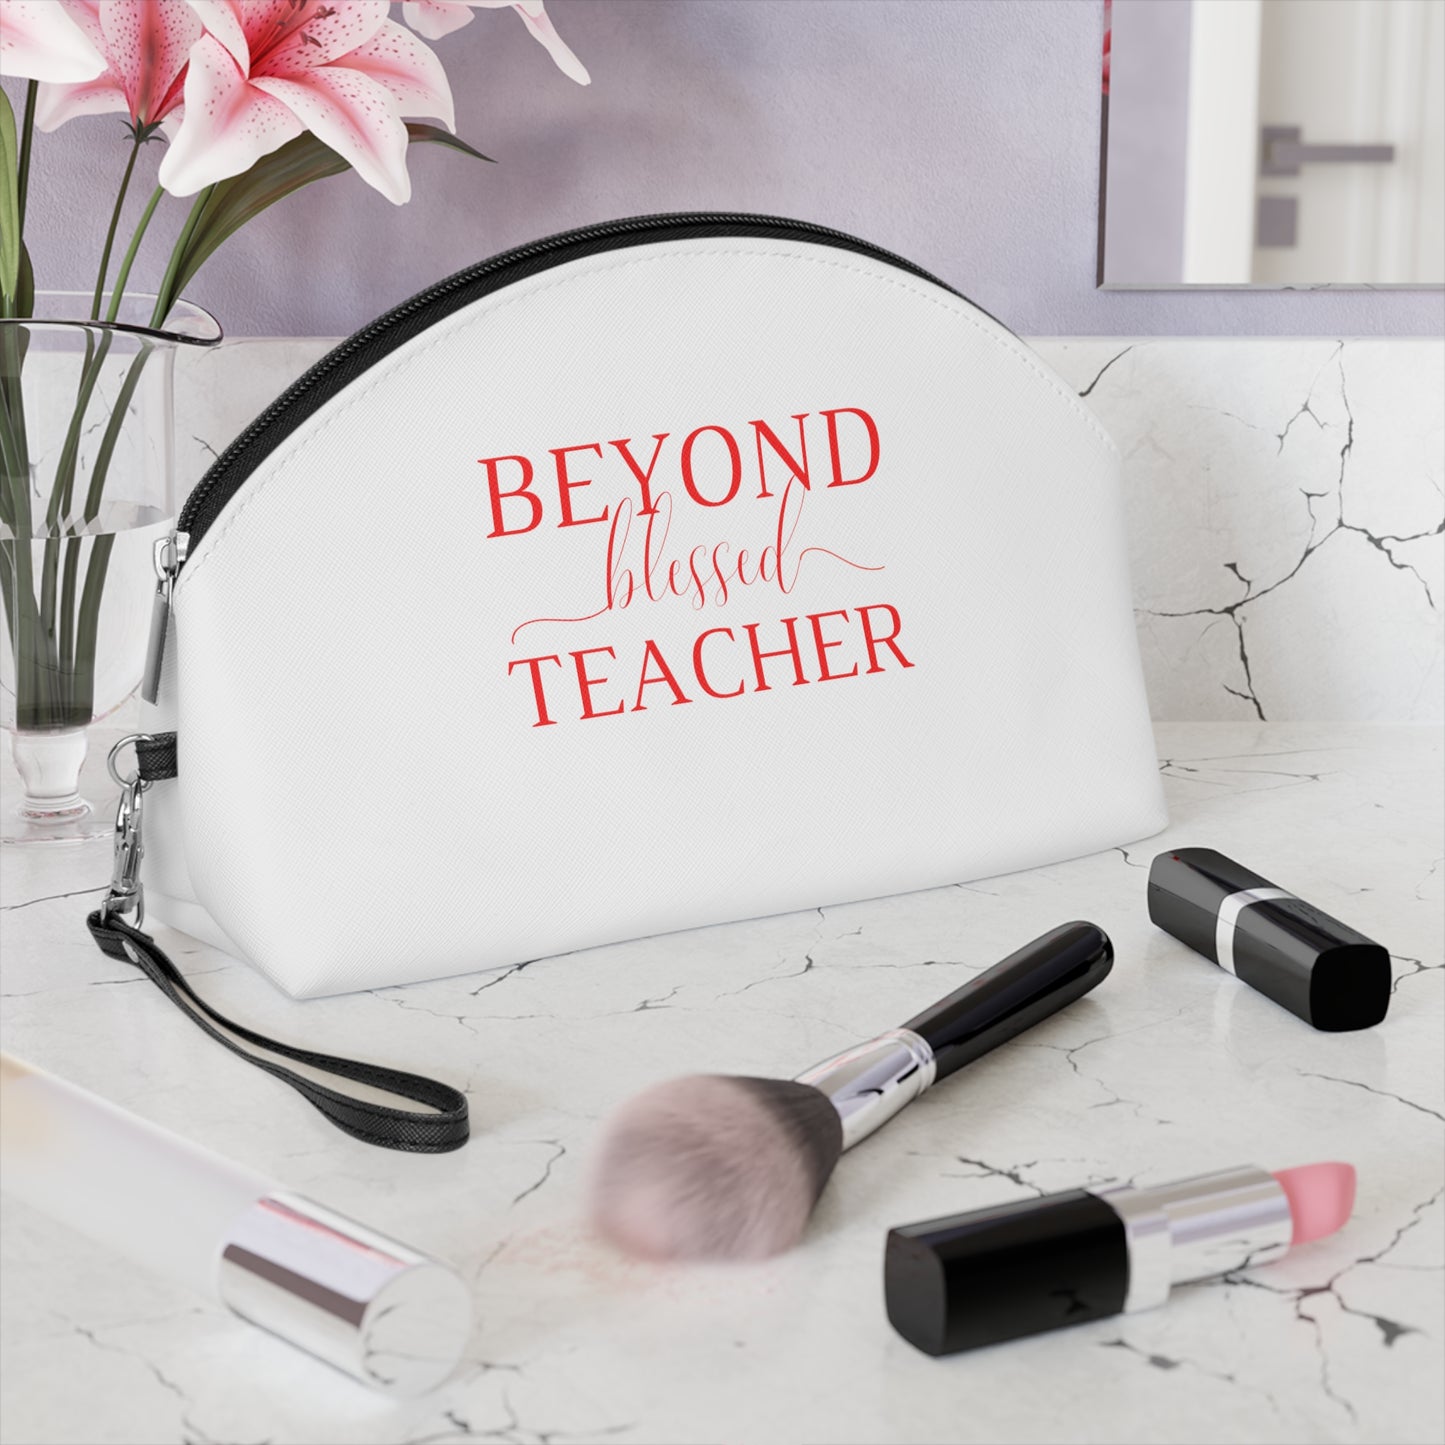 Beyond Blessed Teacher - Makeup Bag